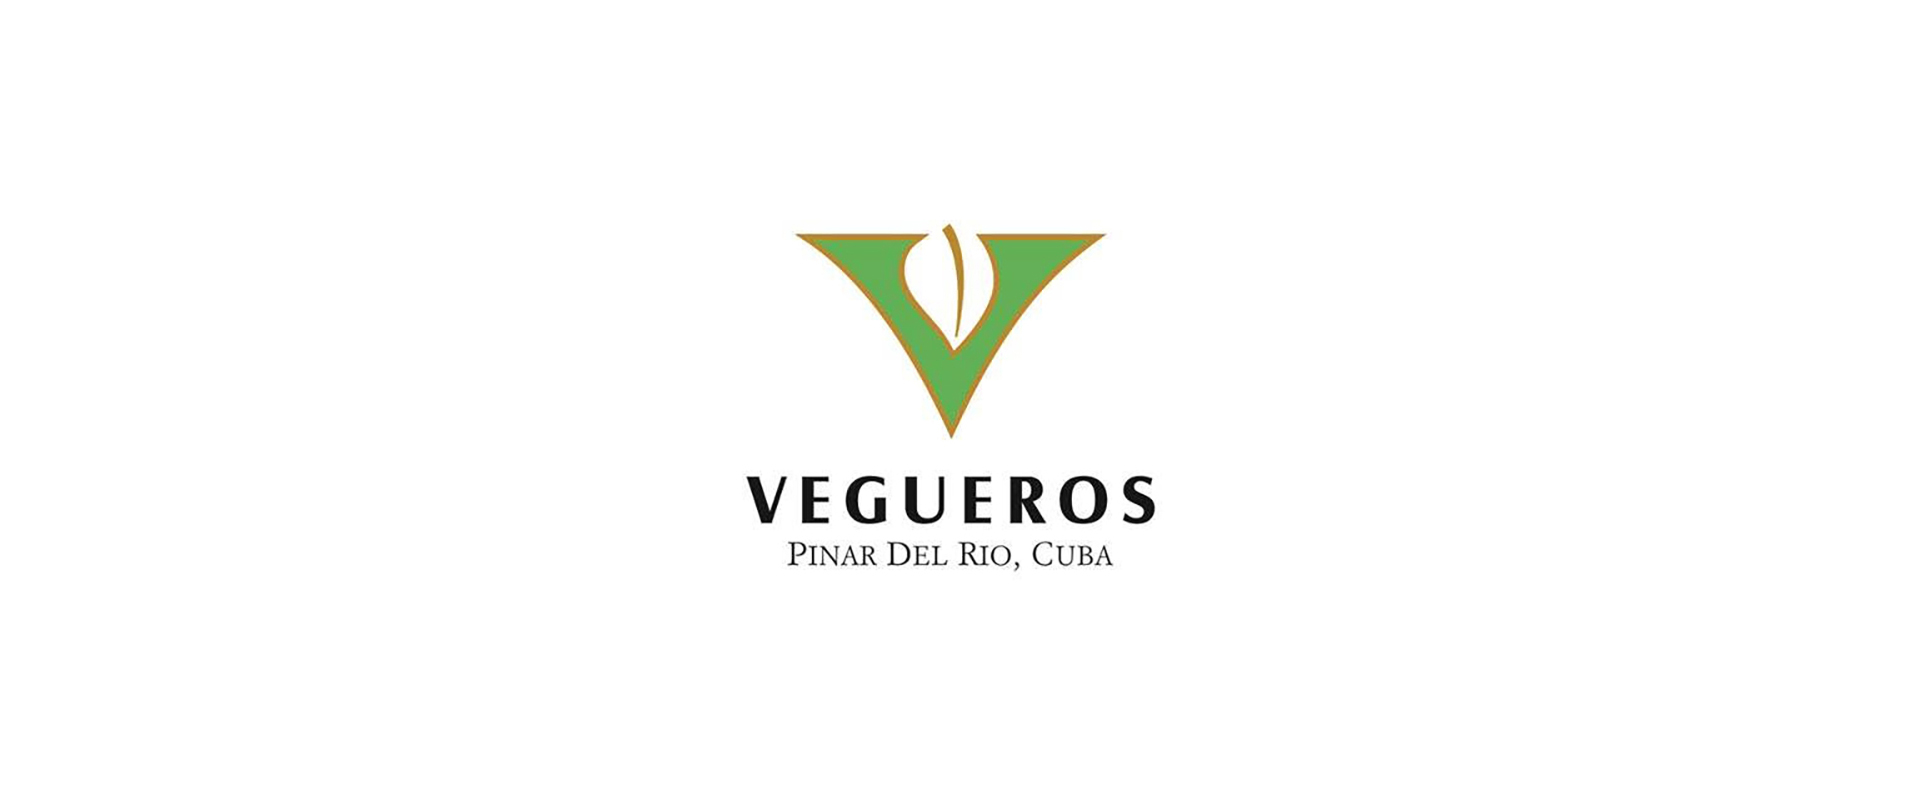 Cuban Cigars > Vegueros